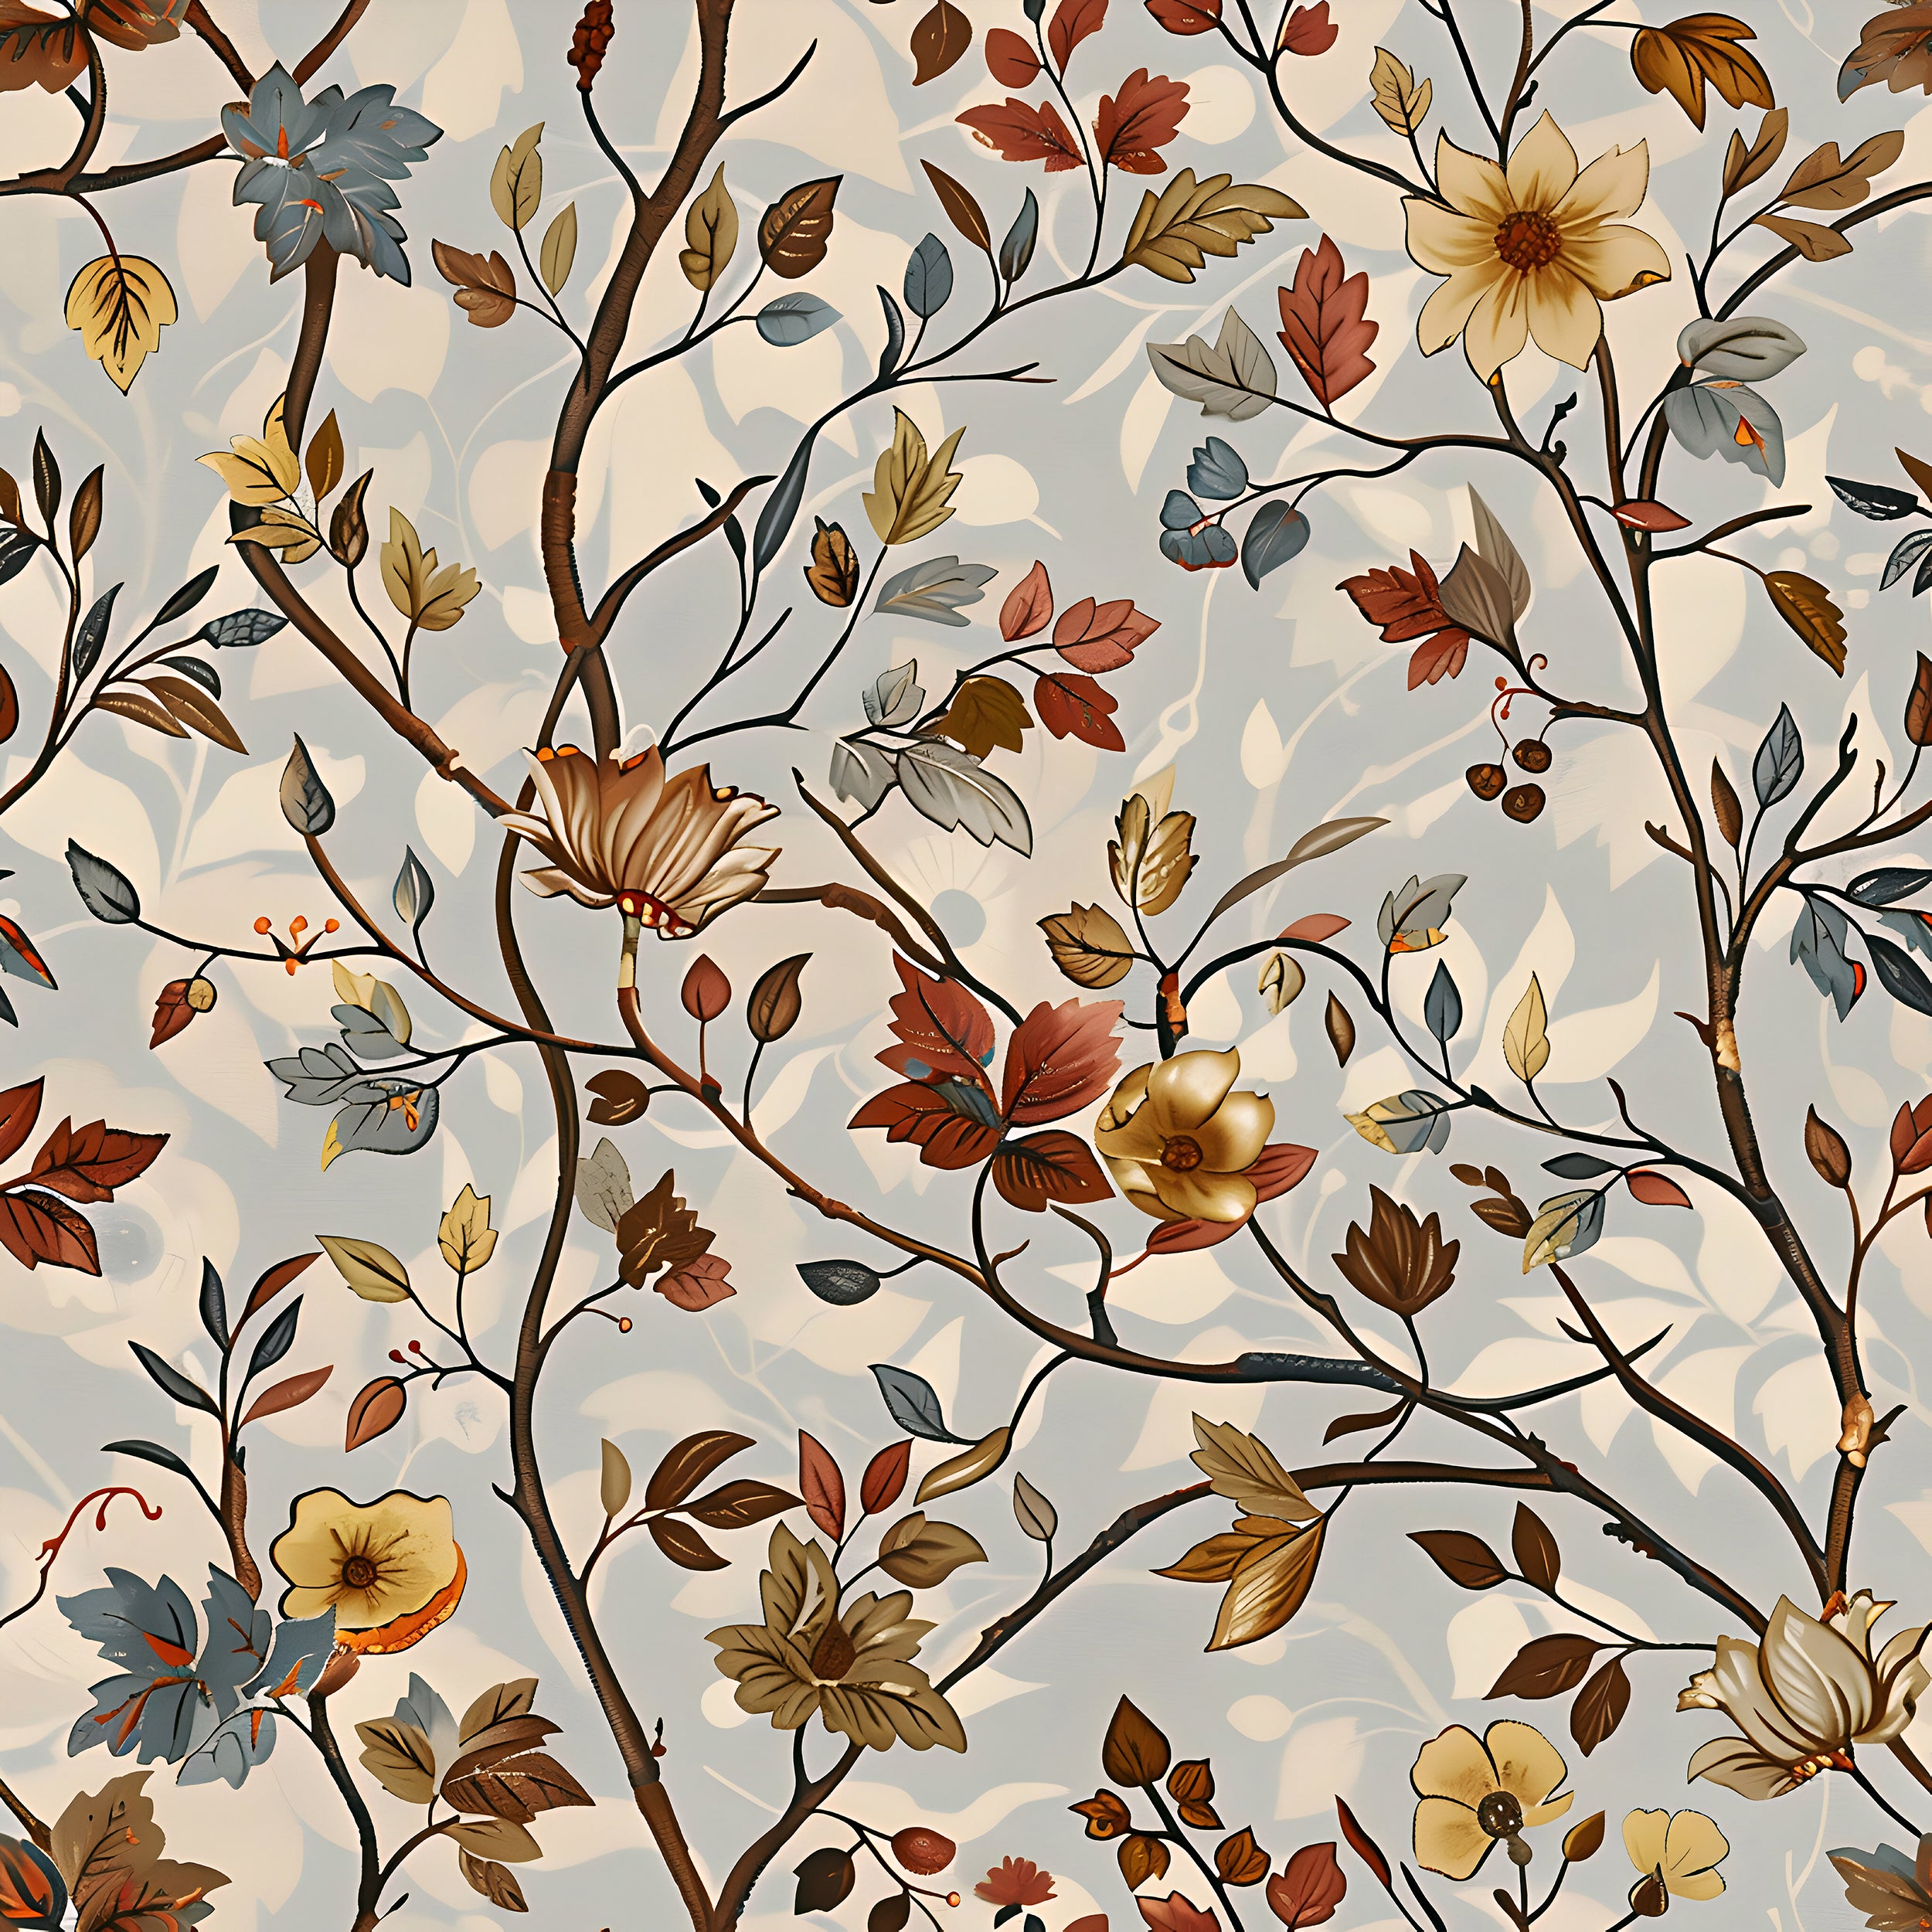 Peel and stick autumn decor Autumn botanical wallpaper